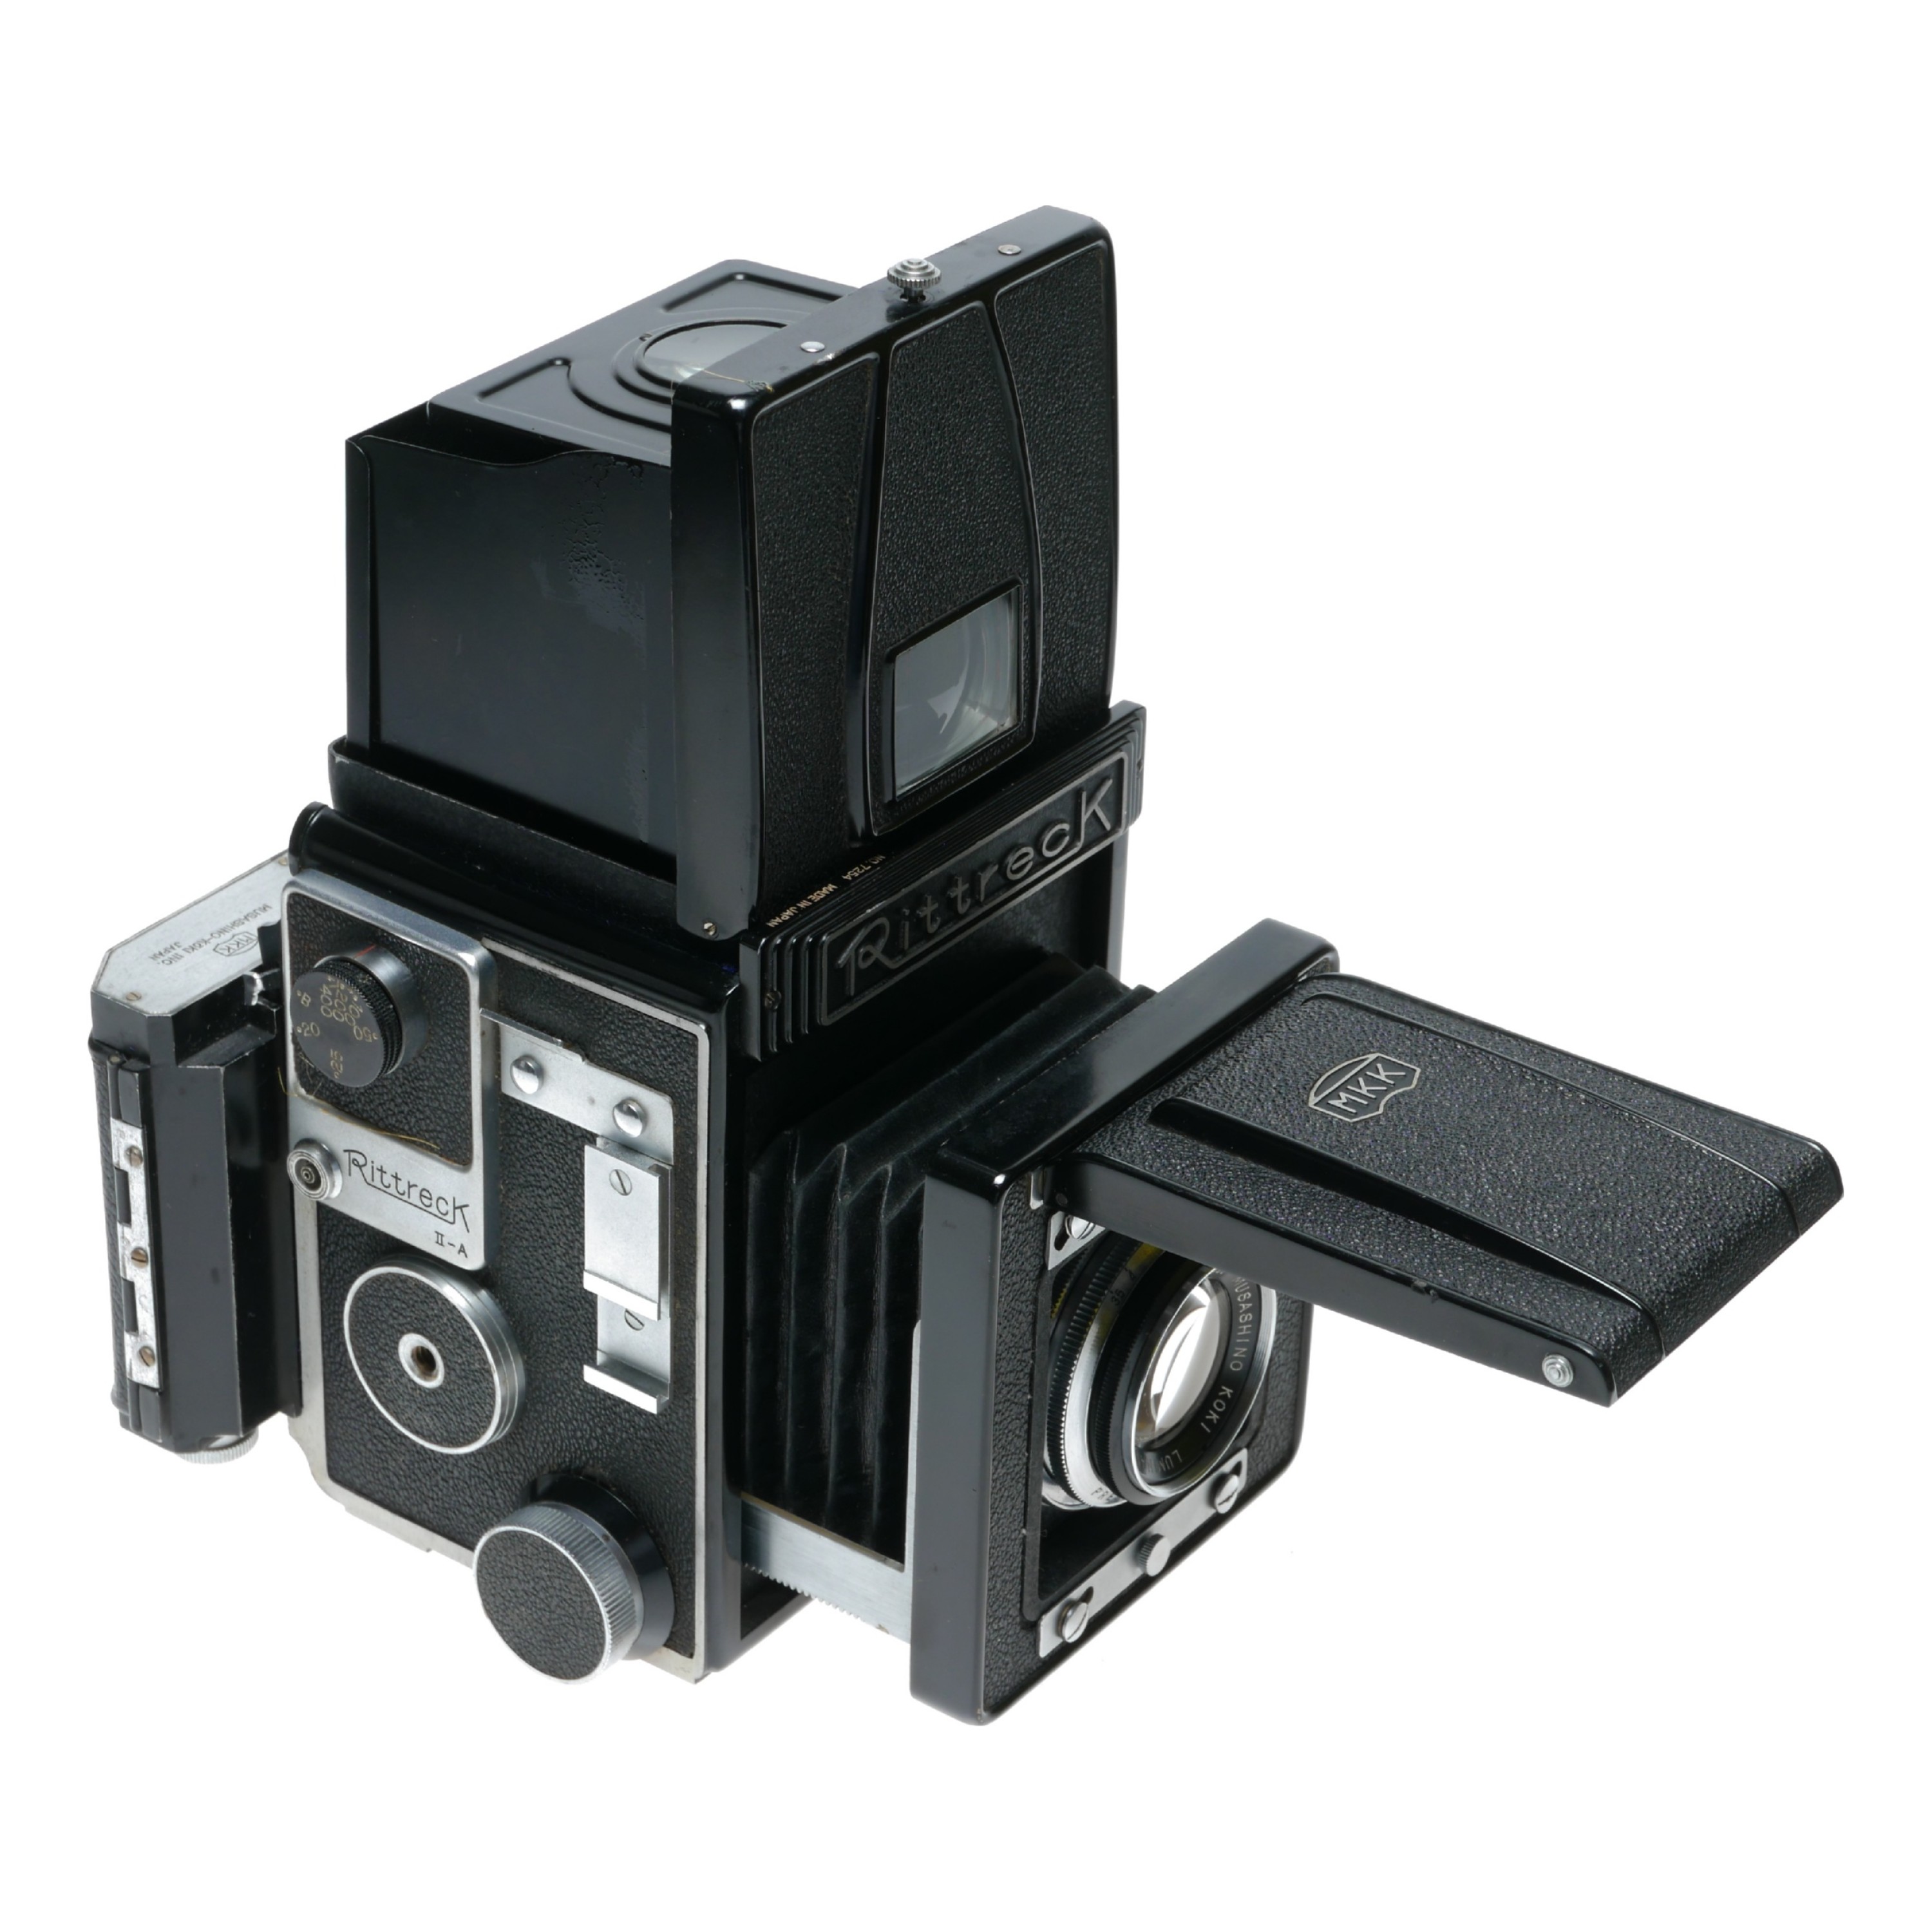 Musashino Koki MKK Rittreck IIA SLR Film Camera Luminant 1:3.5 fu003d10.5cm